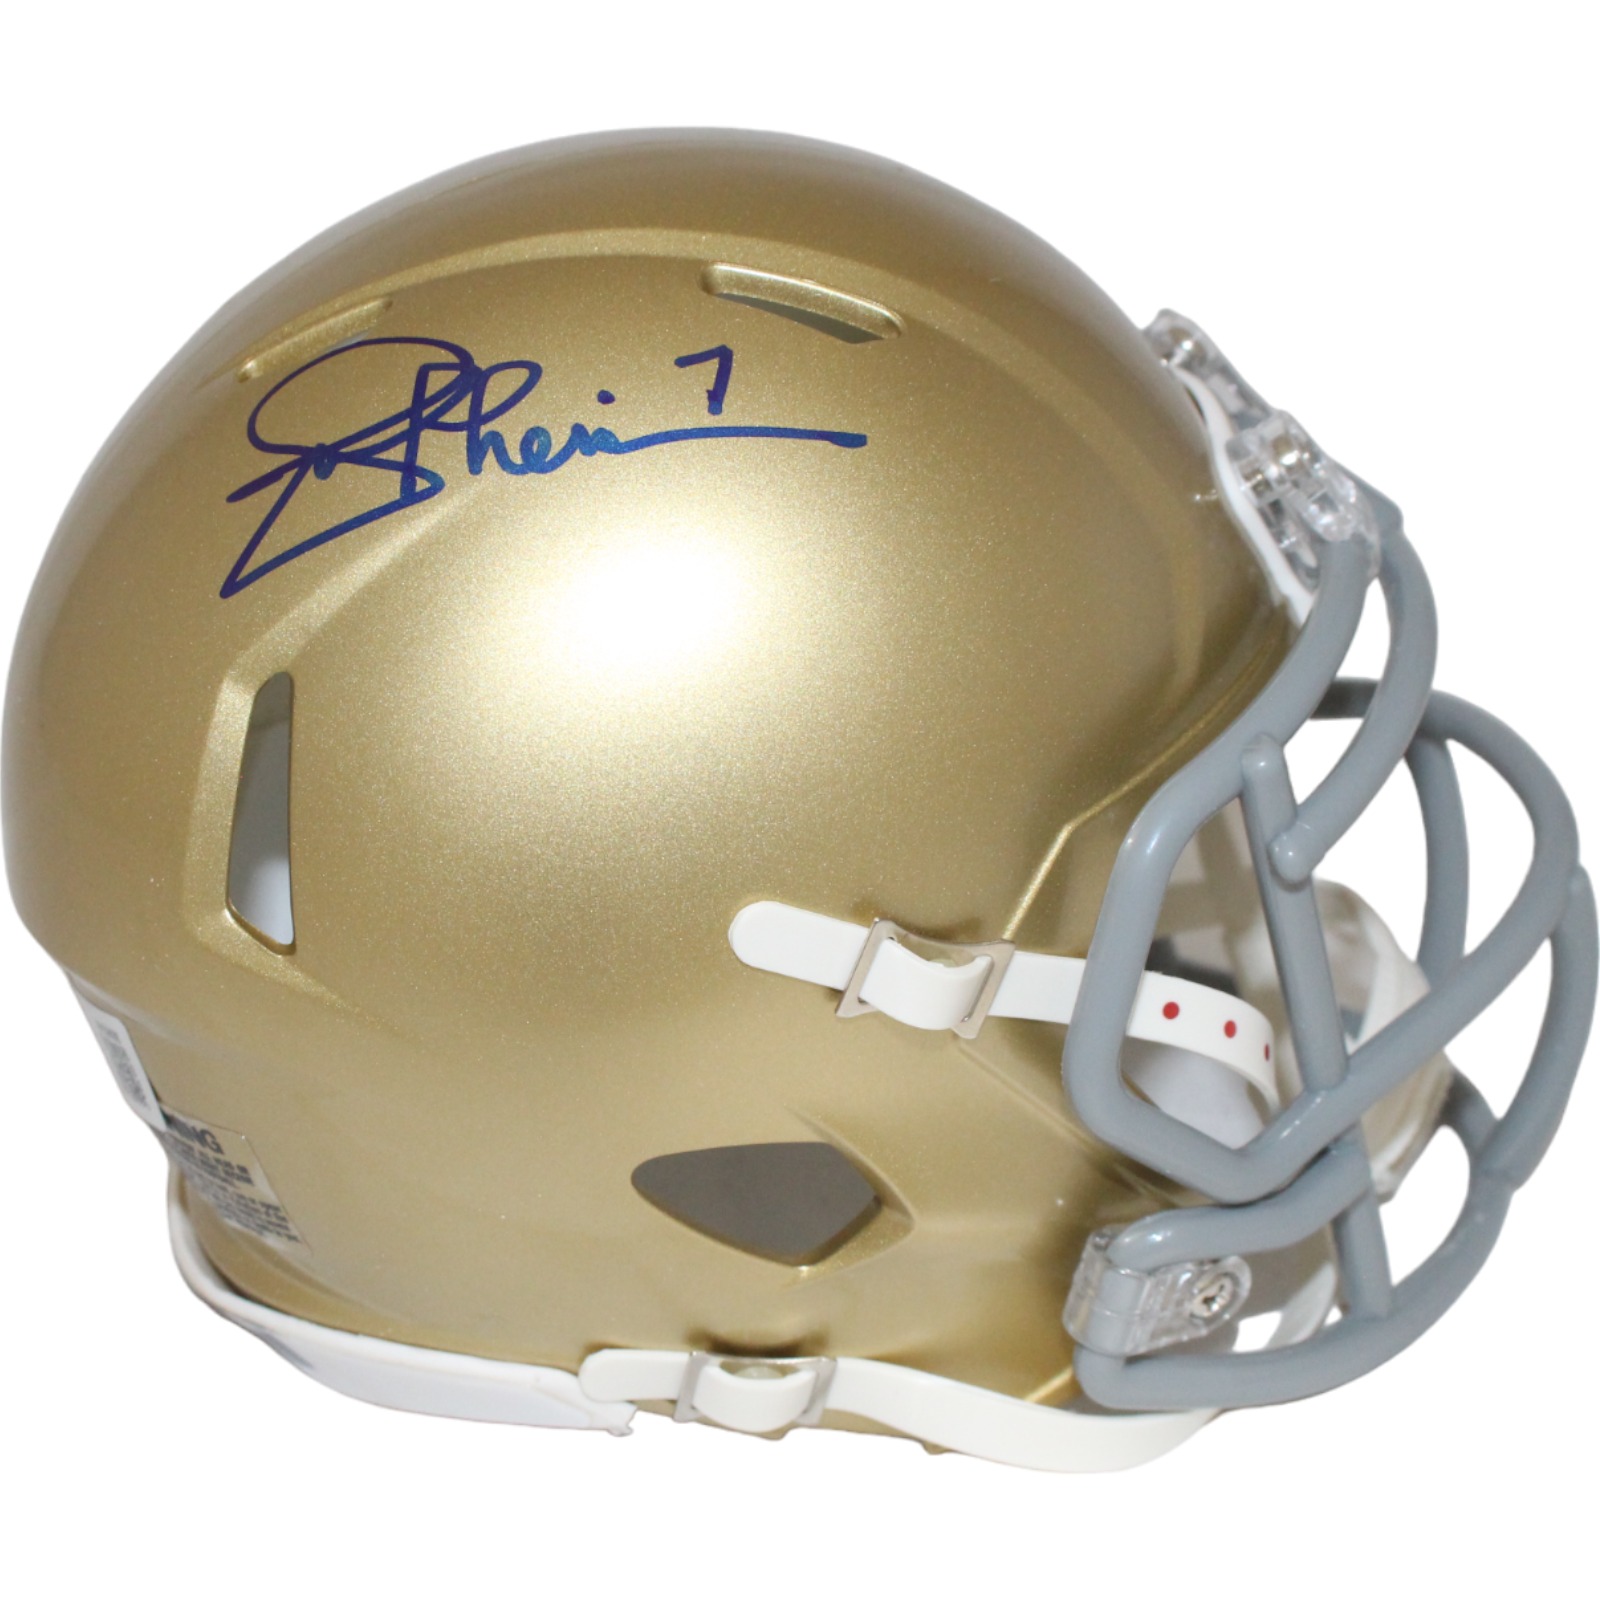 Joe Theismann Signed Notre Dame Fighting Irish Mini Helmet Beckett